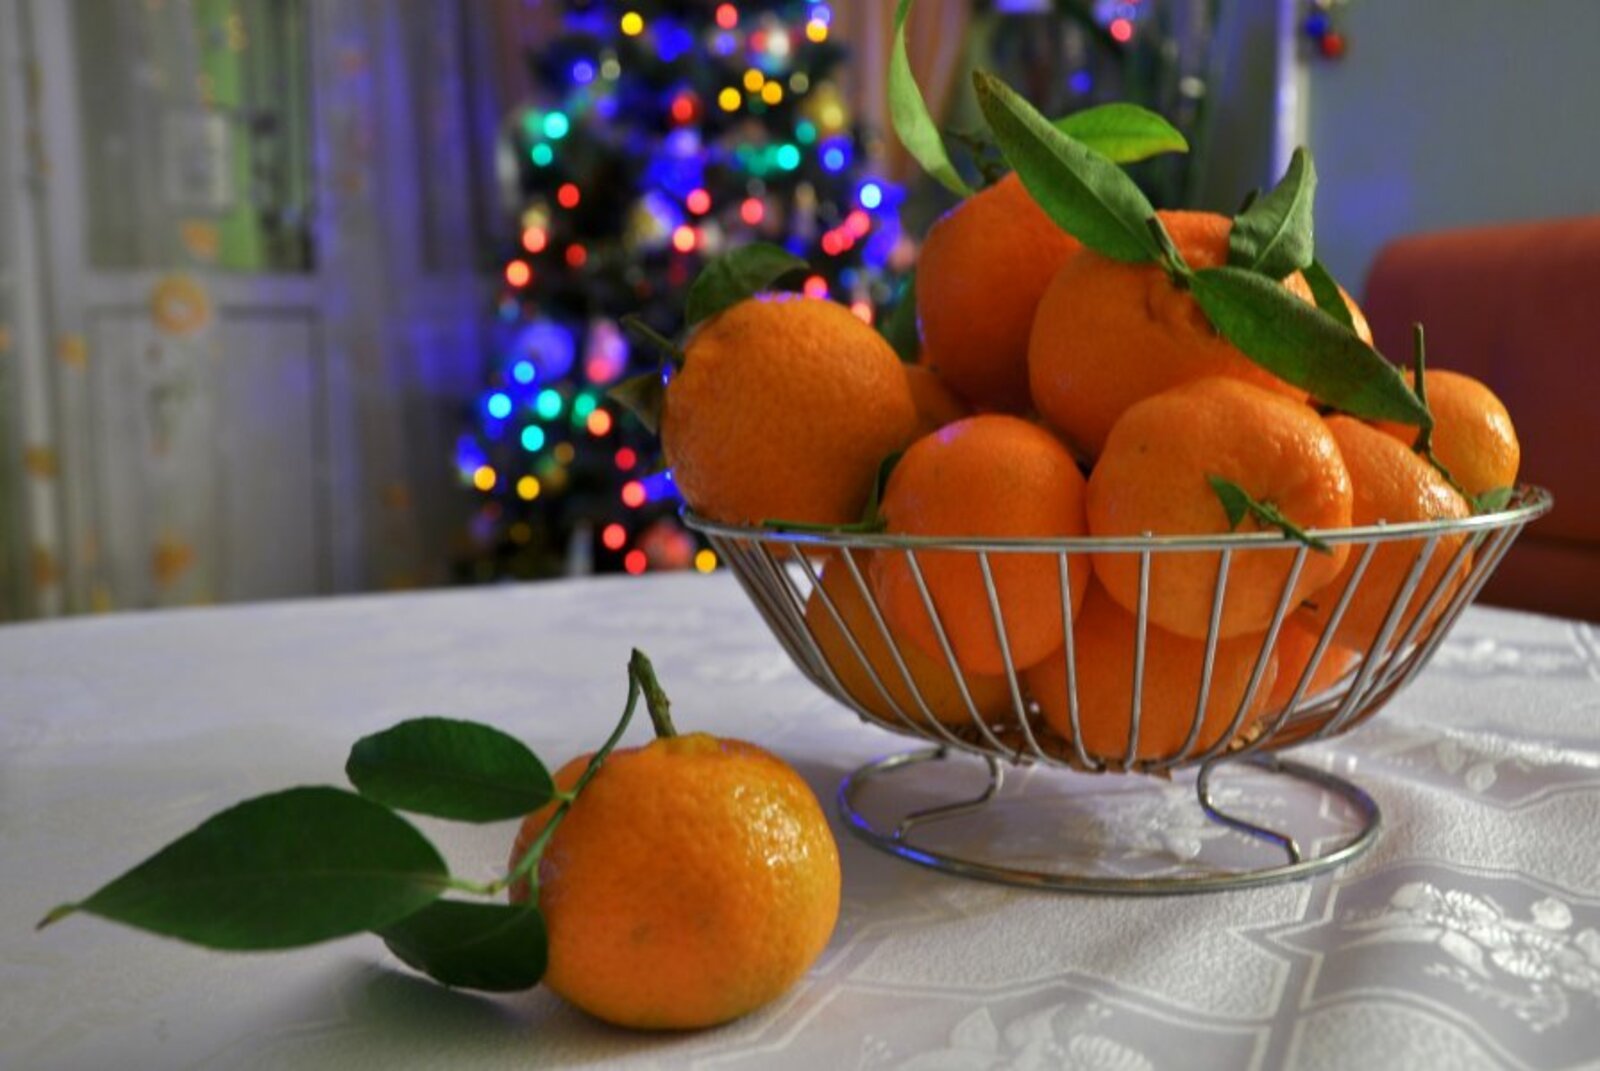 Мандарины весной. Мандарины новый год. Натюрморт с мандаринами. Мандарины на столе. Мандарины на новогоднем столе.